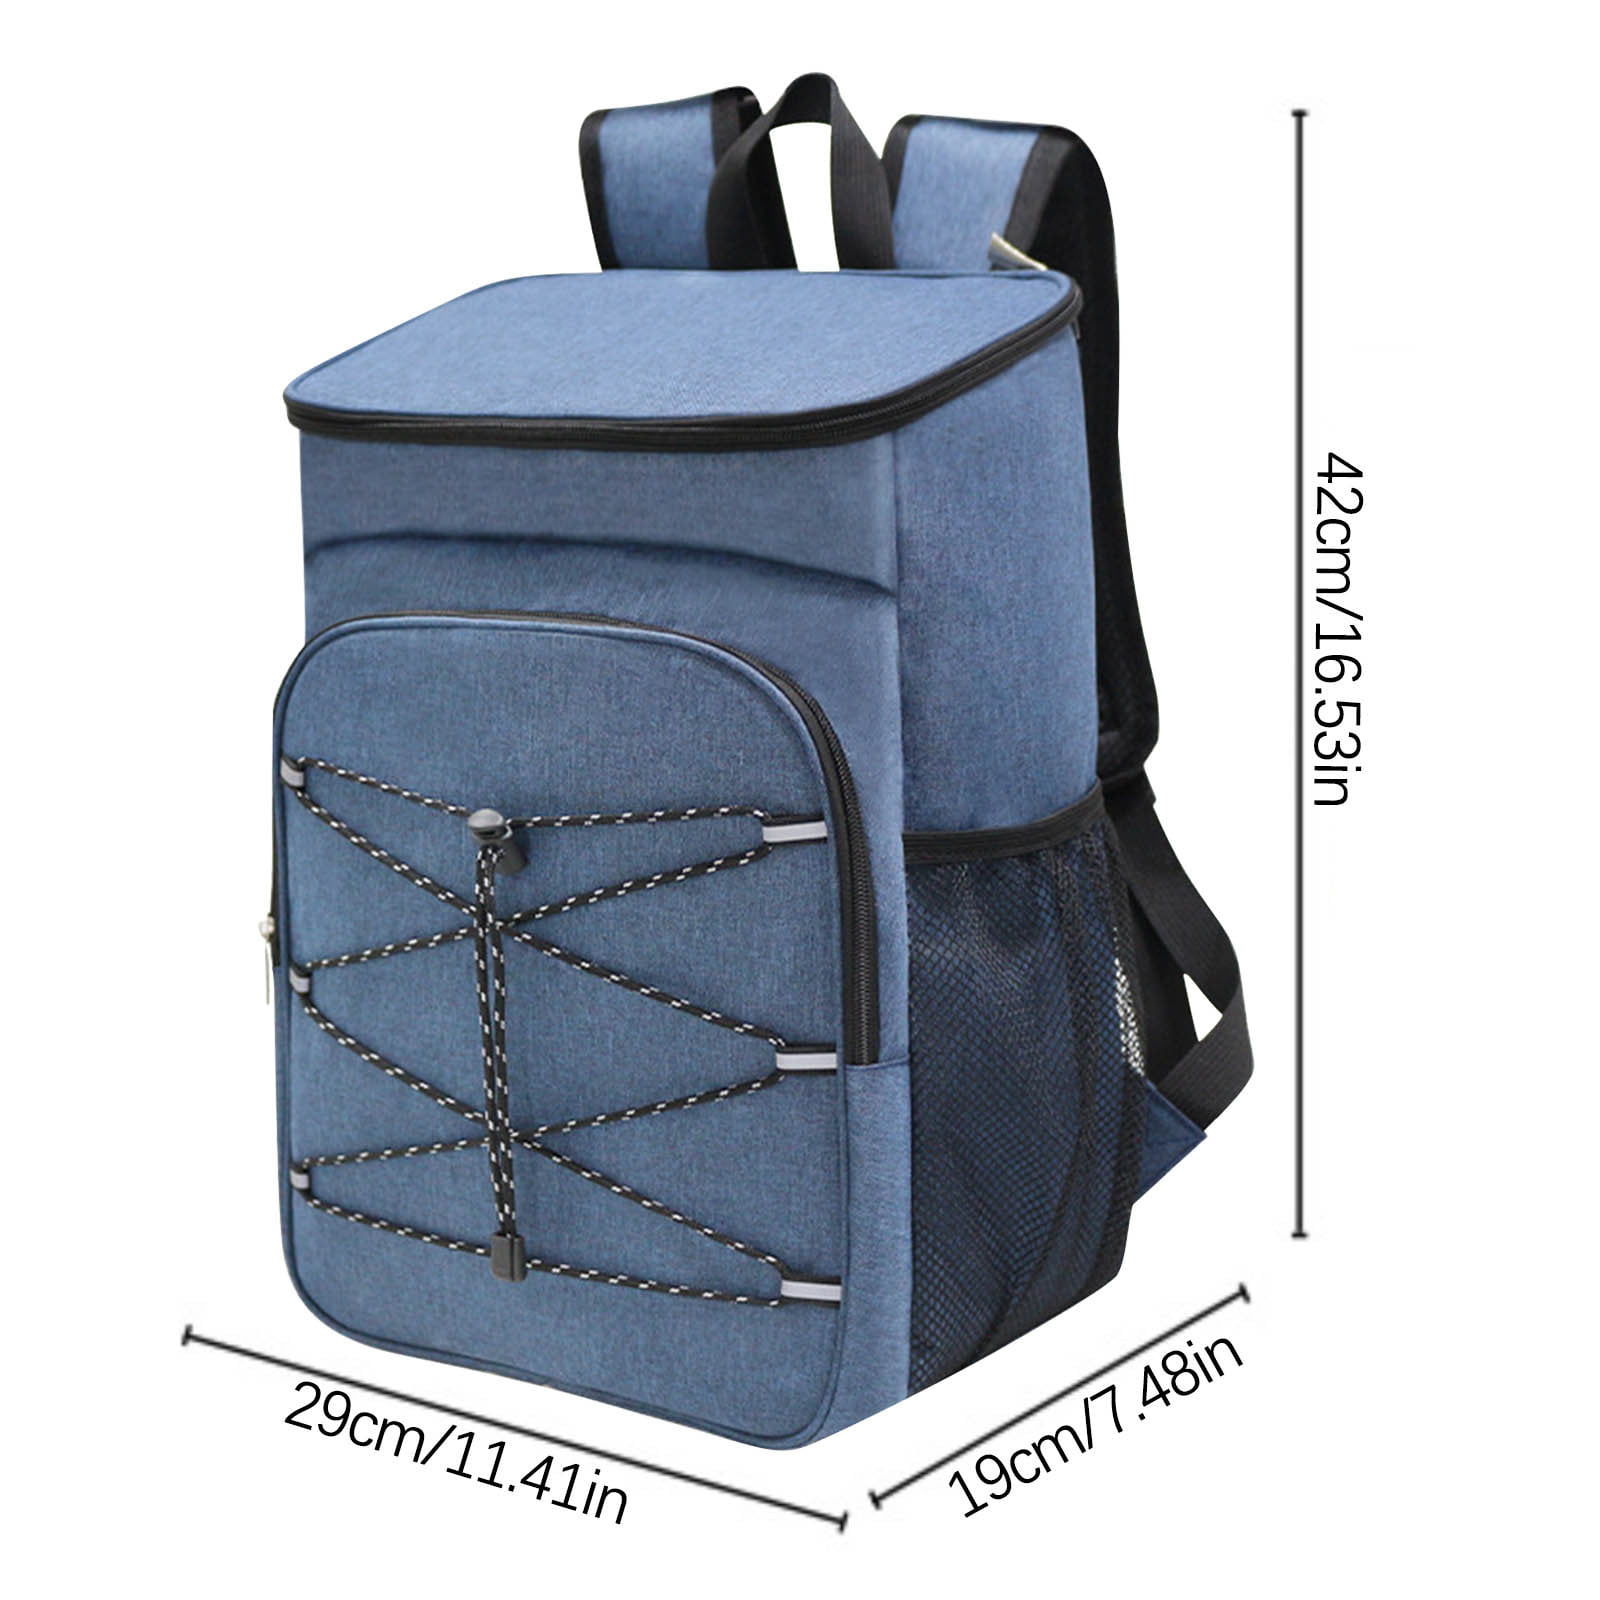 Meitianfacai Backpack Cooler Leakproof Insulated Waterproof